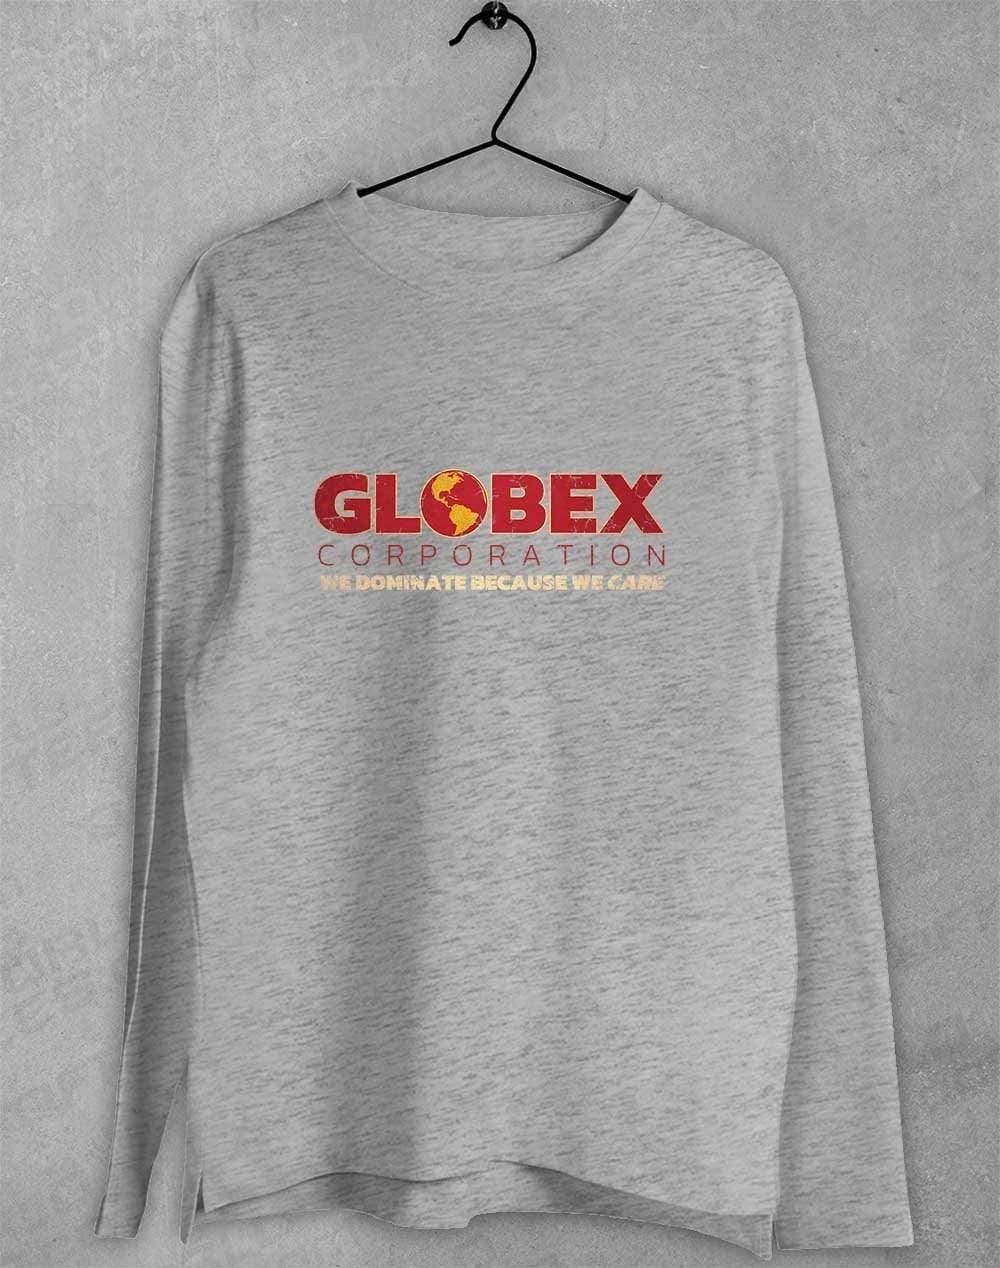 Globex Corporation Long Sleeve T-Shirt S / Sport Grey  - Off World Tees